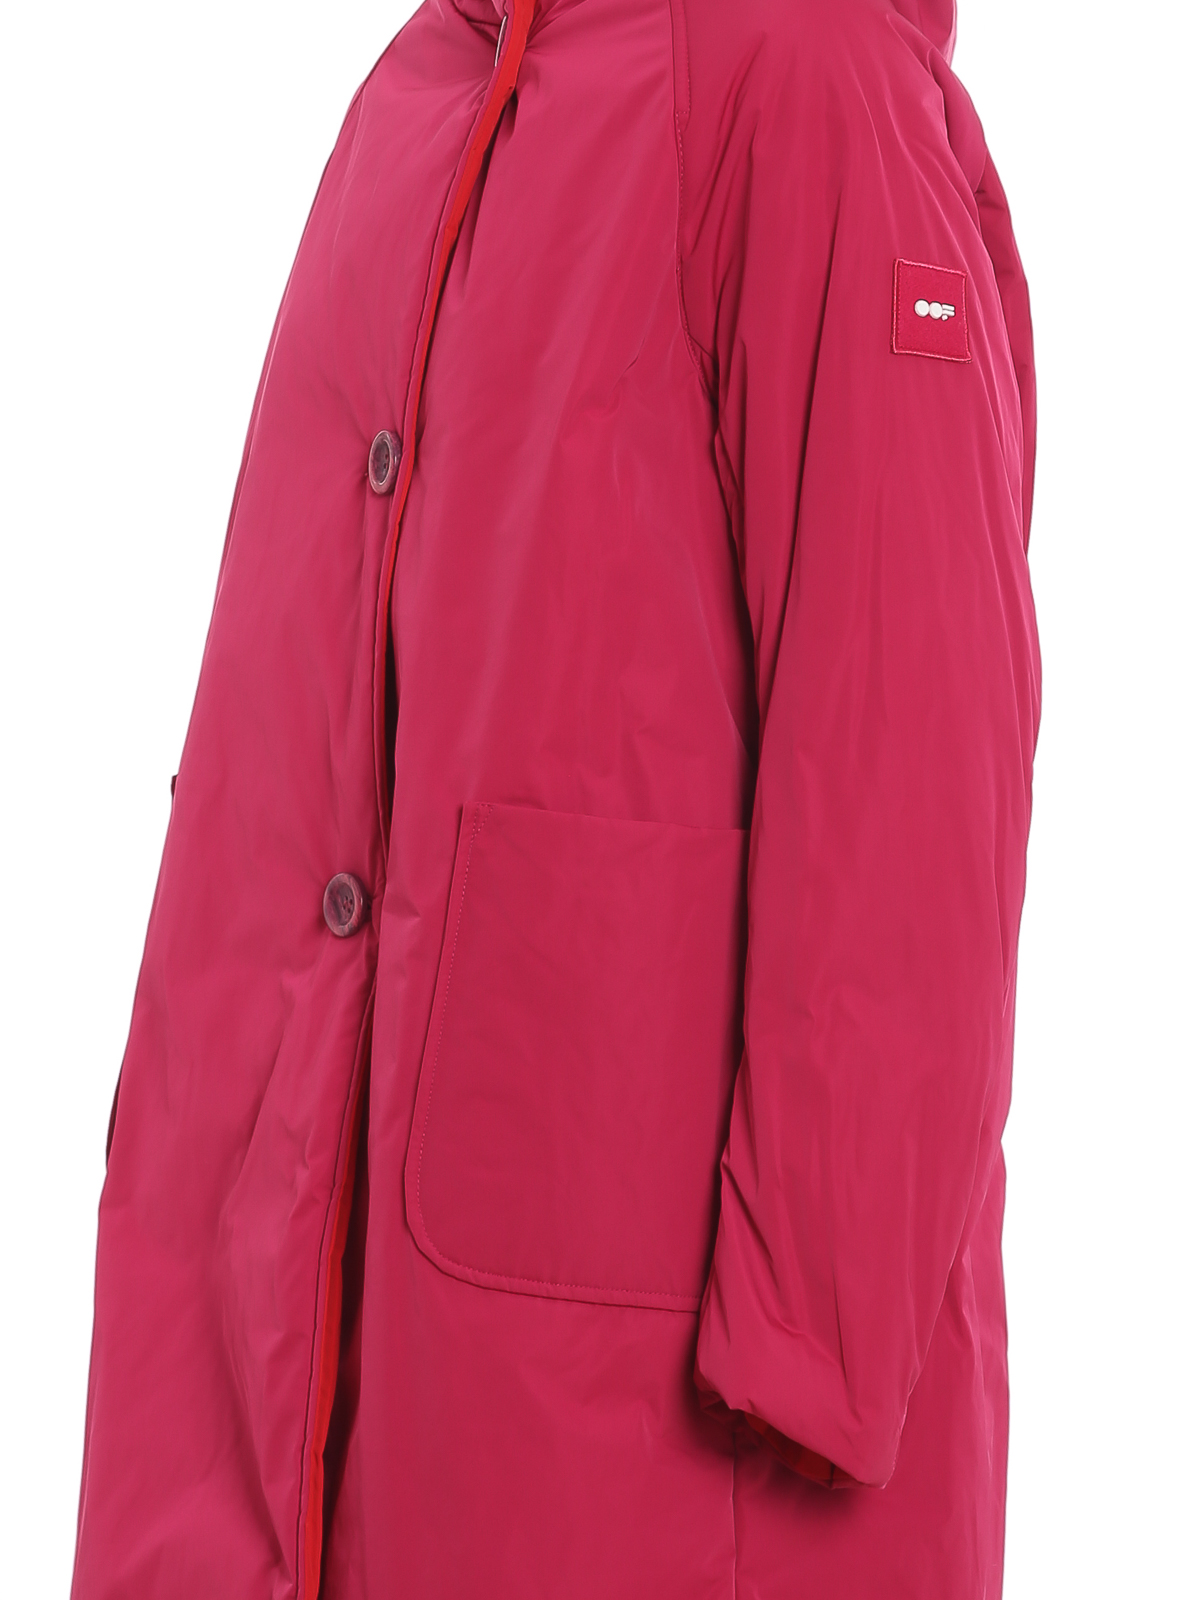 Padded jackets OOF Wear - 9410 padded jacket - OFJA9410OF184536